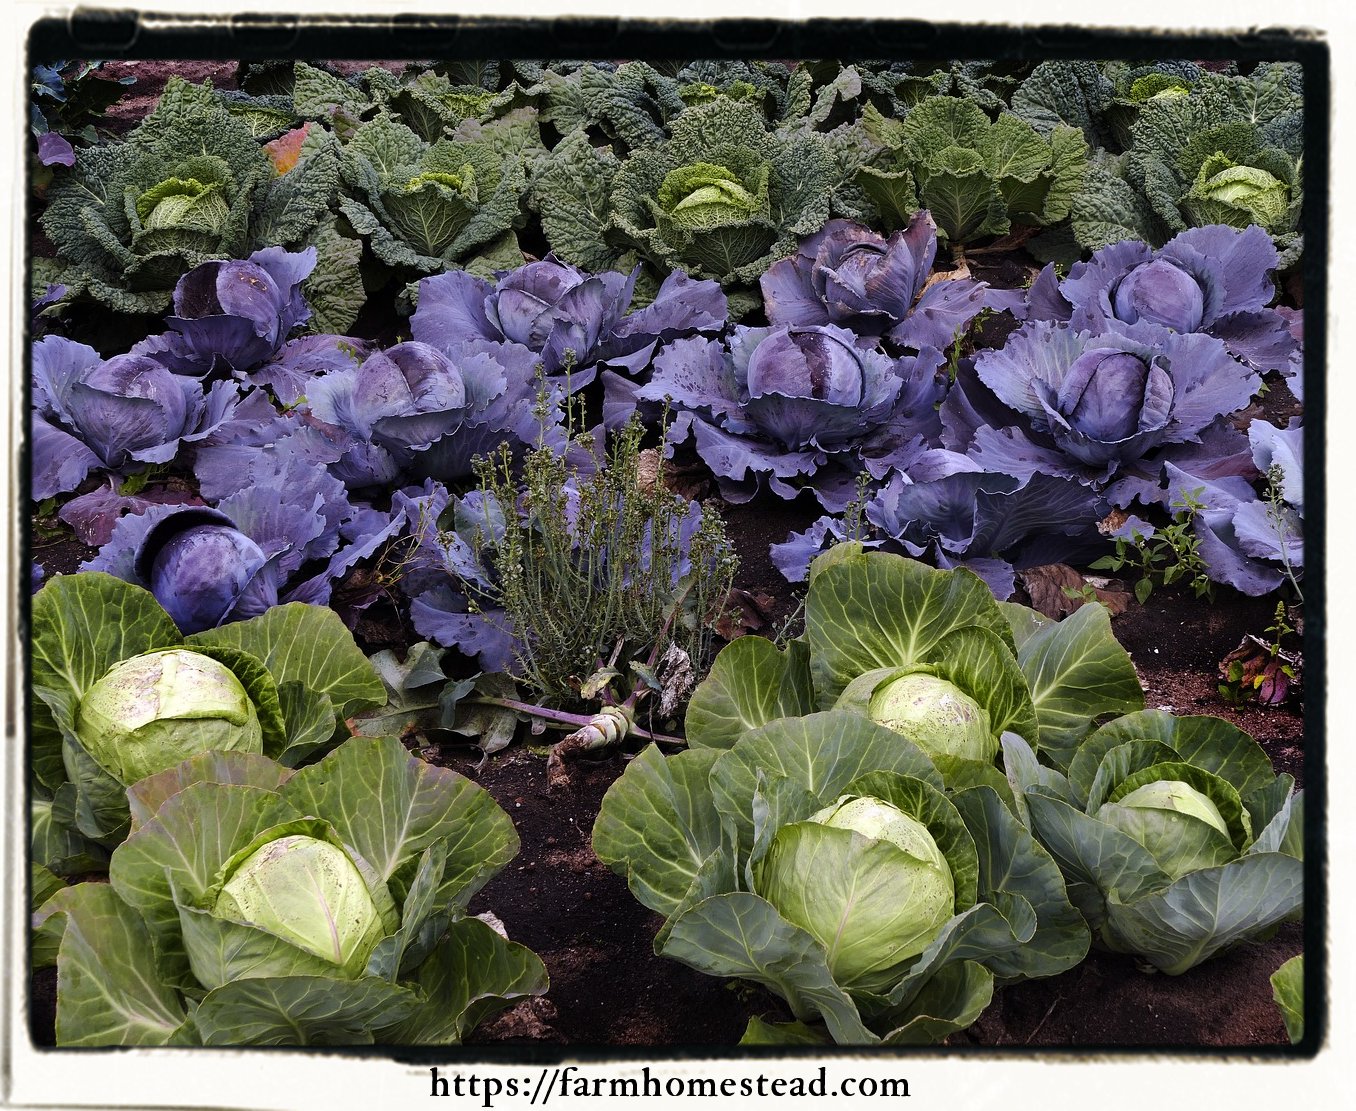 varieties of cabbages